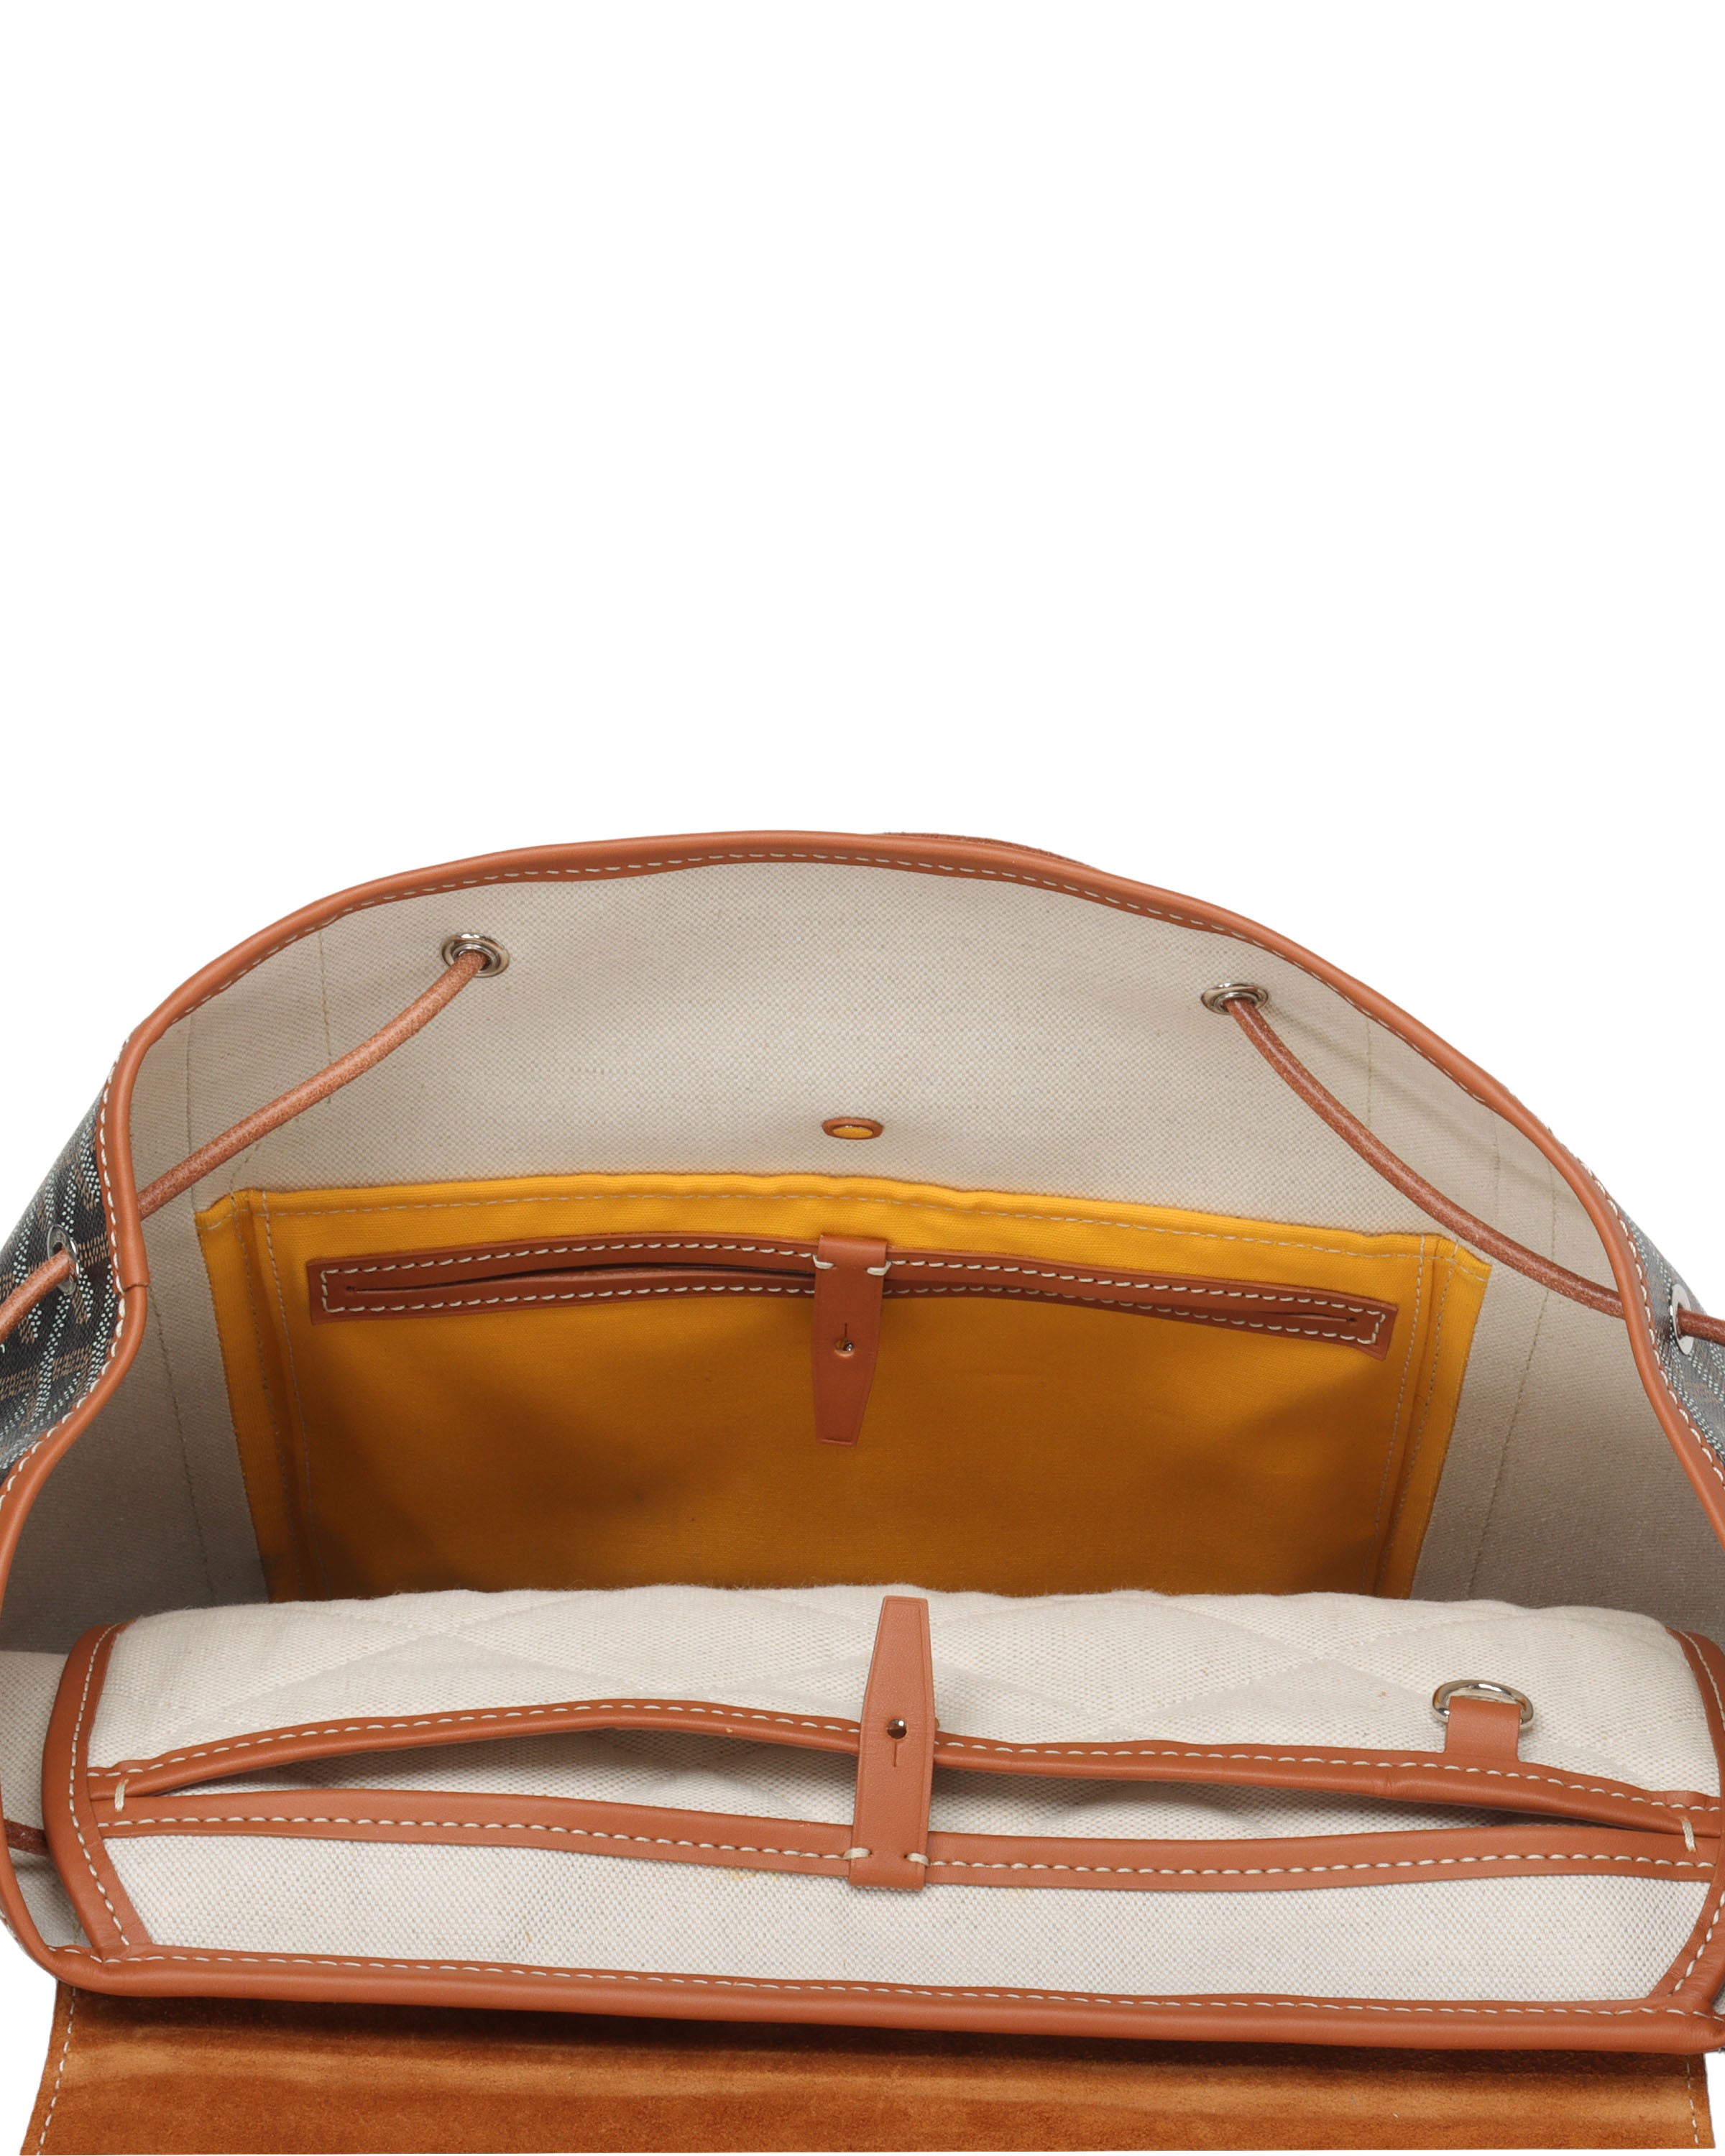 Goyard Alpin MM Backpack - Black Backpacks, Bags - GOY36803